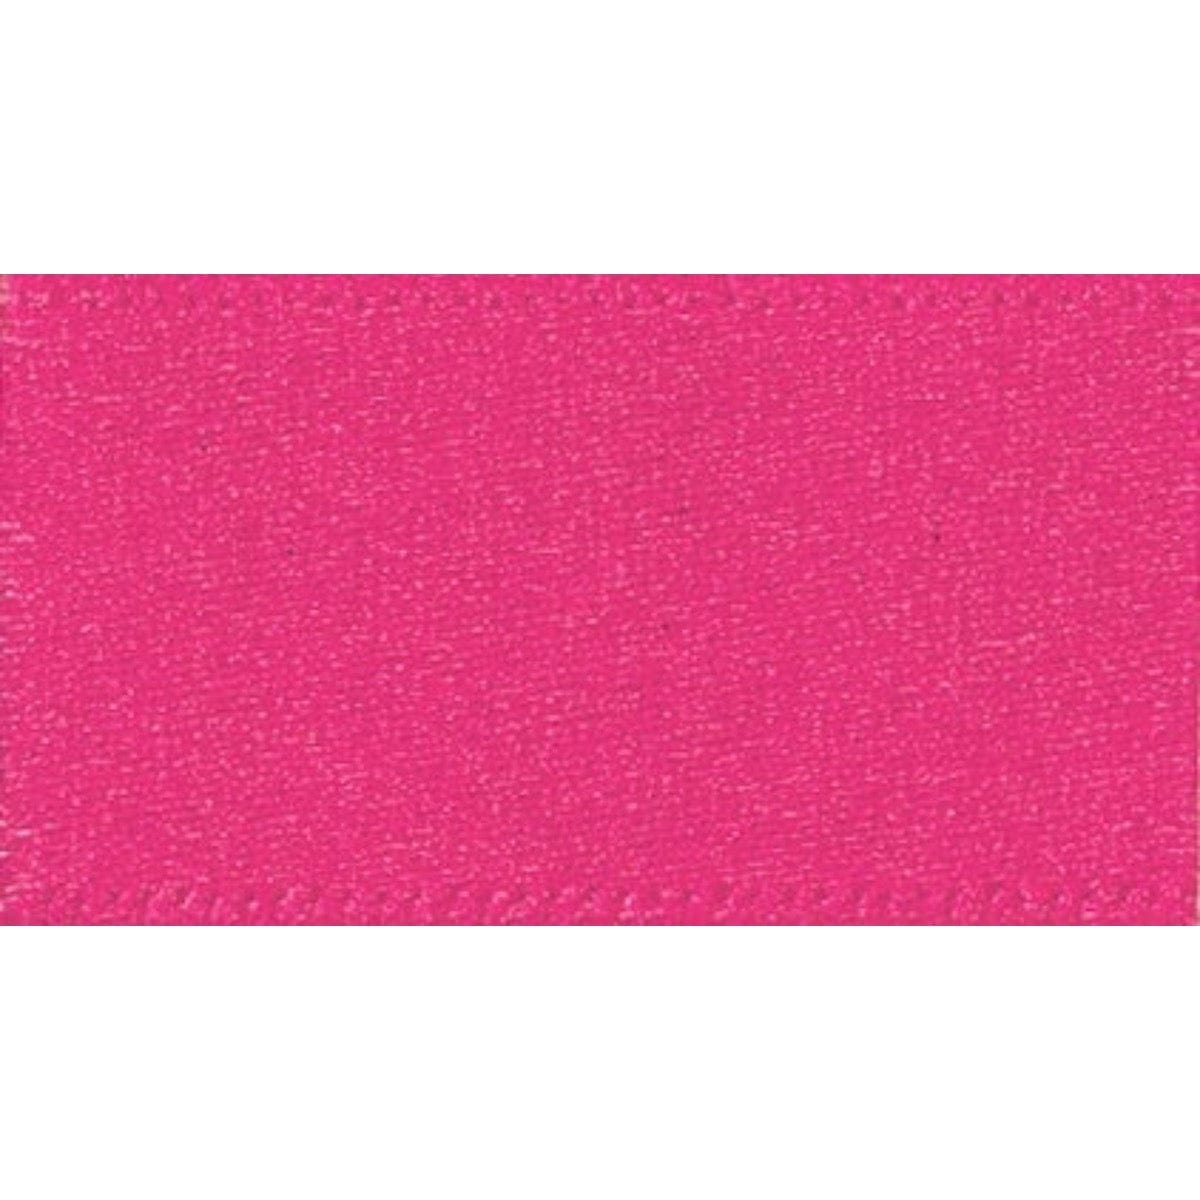 Double Faced Satin Ribbon Shocking Pink: 7mm wide. Price per metre.